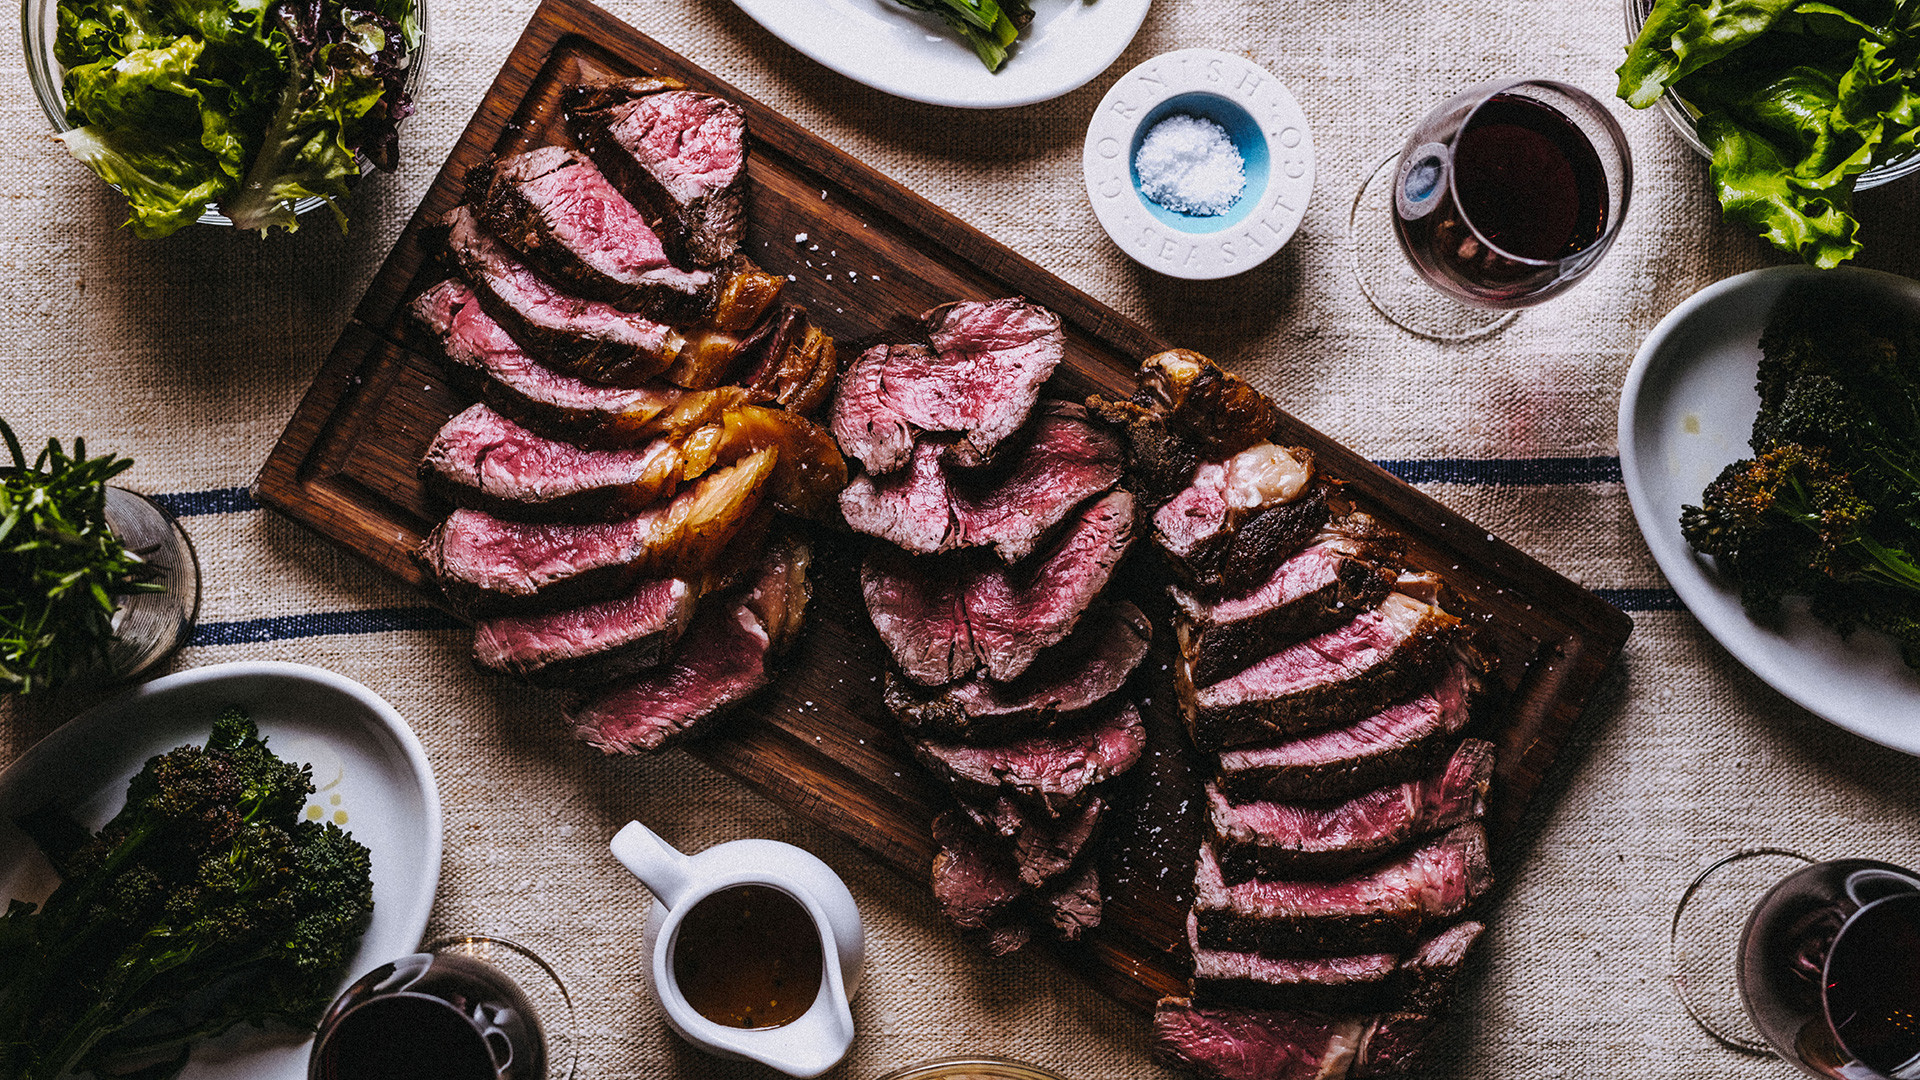 22 Best Steak Restaurants in London Juicy Cuts to Try Foodism